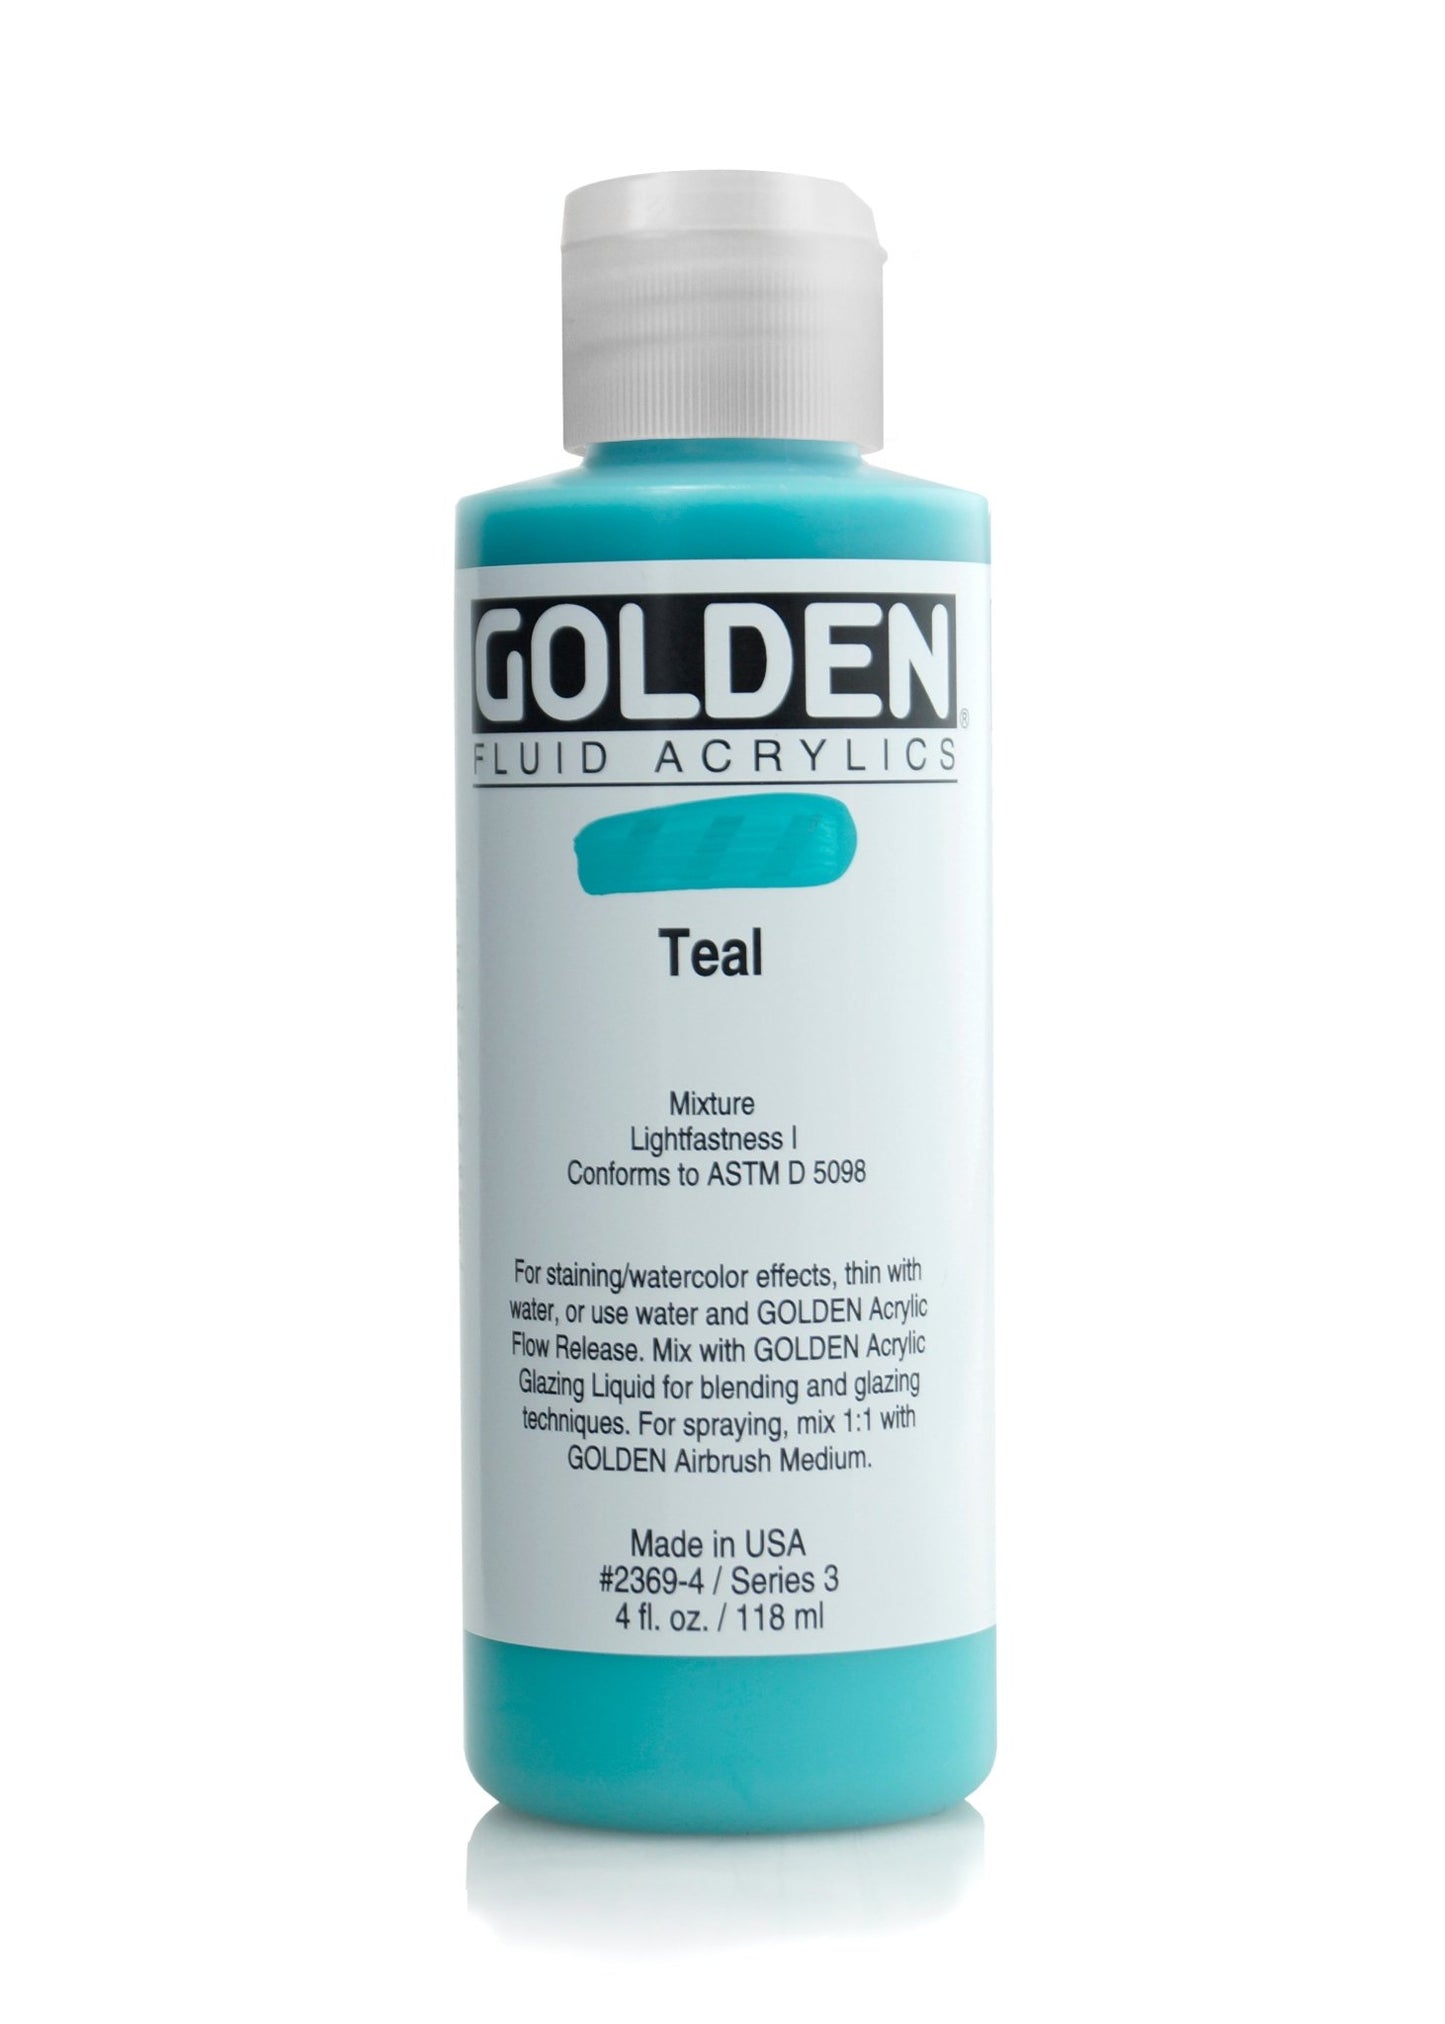 Golden Fluid Acrylic 118ml Teal - theartshop.com.au